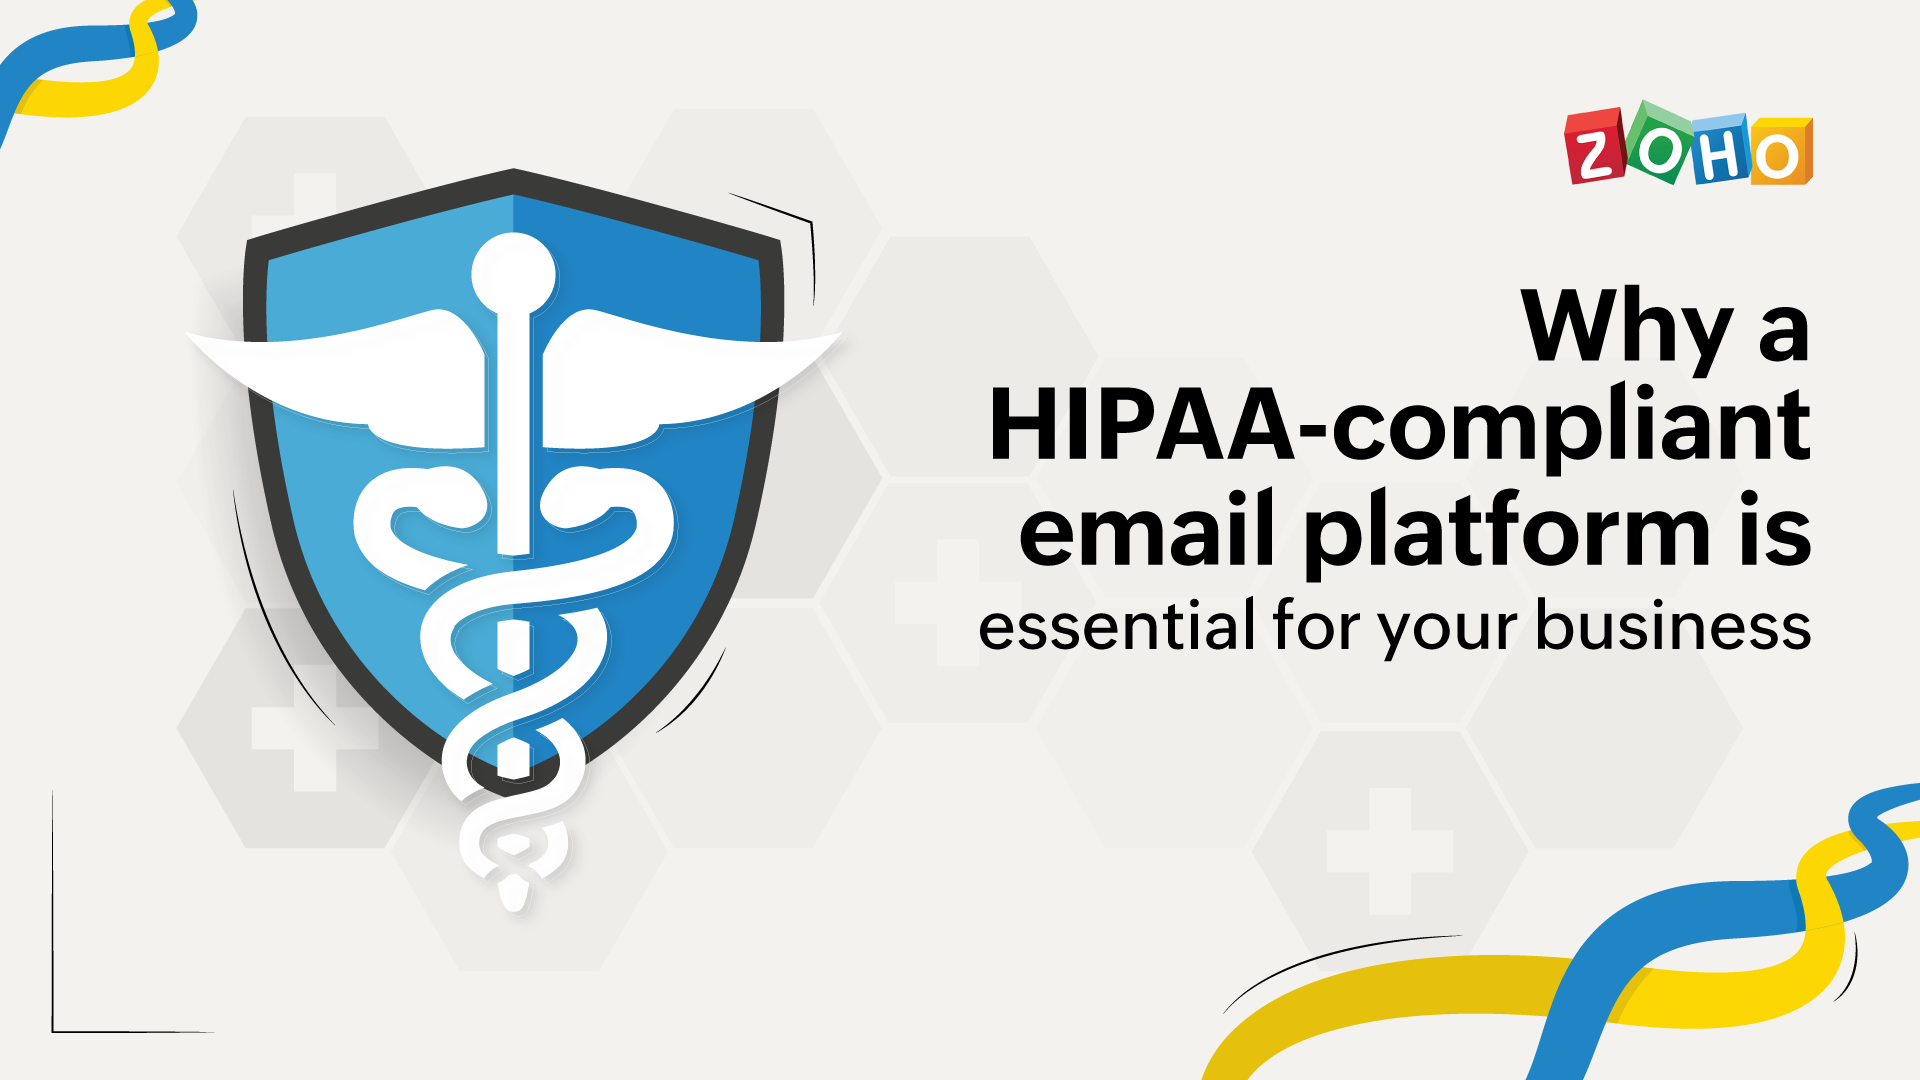 HIPAA compliant email